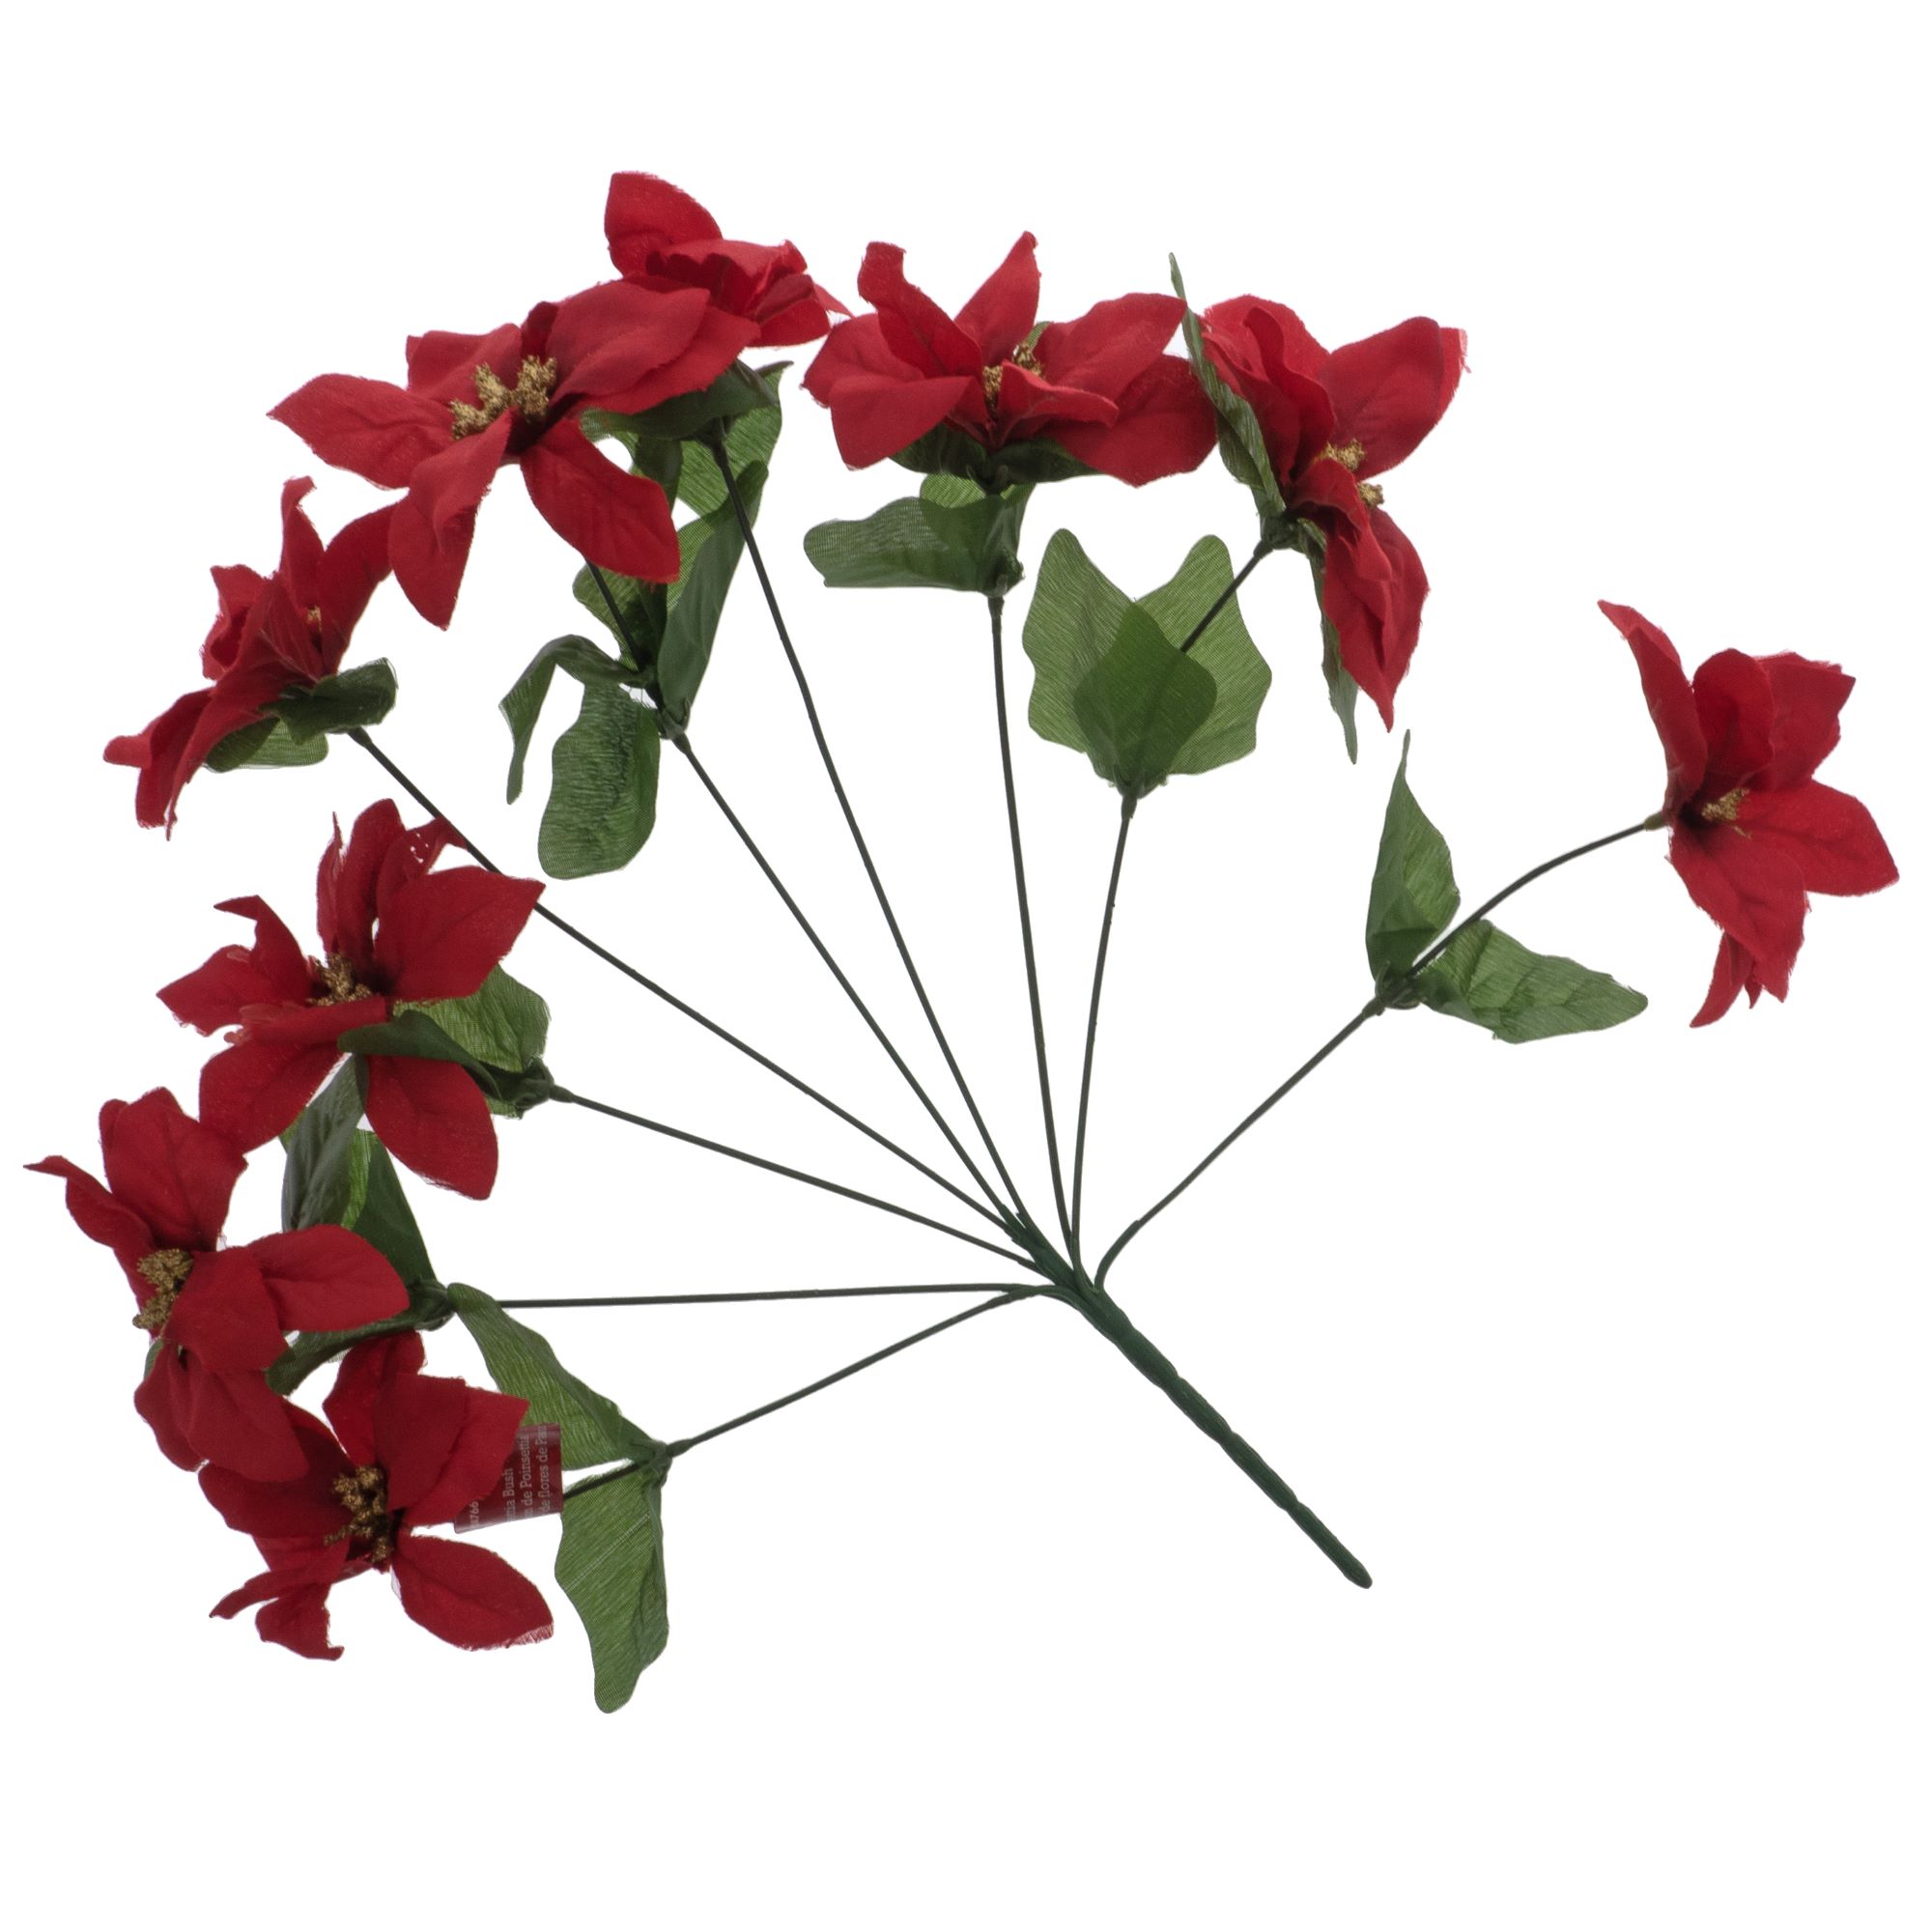 Poinsettia Christmas Flowers - Case of 24